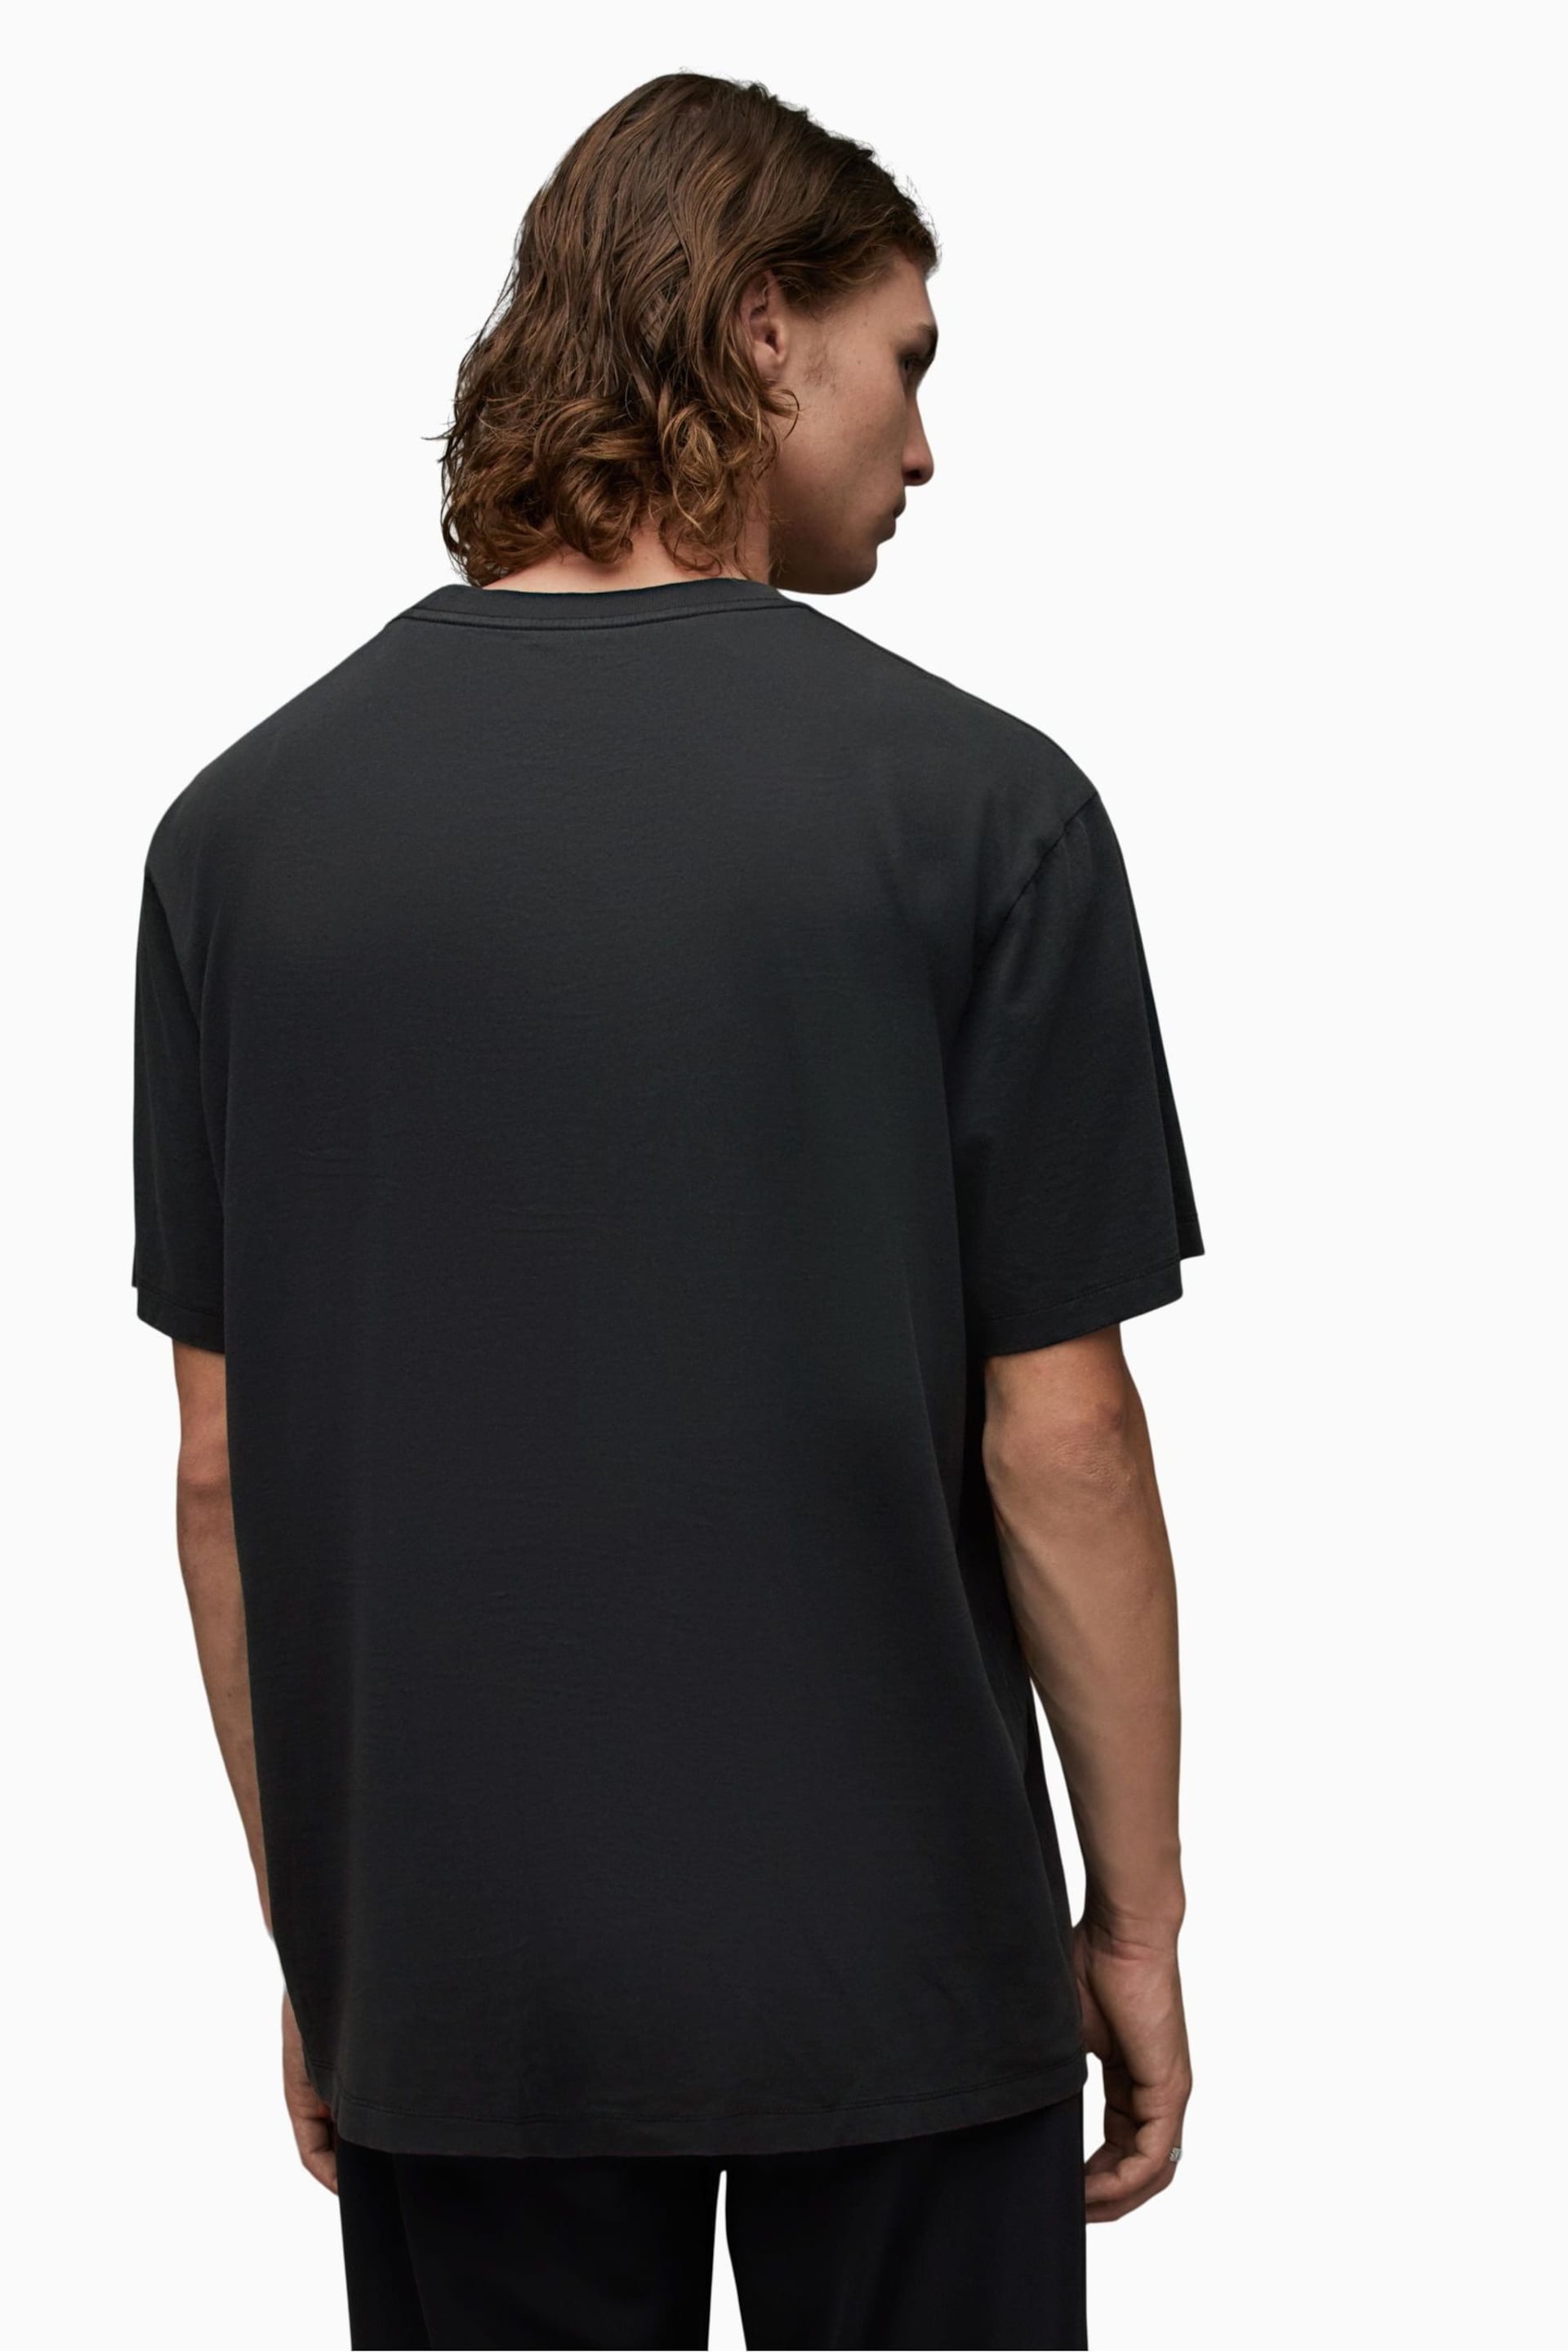 AllSaints Black Zeta Short Sleeve Crew T-Shirt - Image 2 of 5